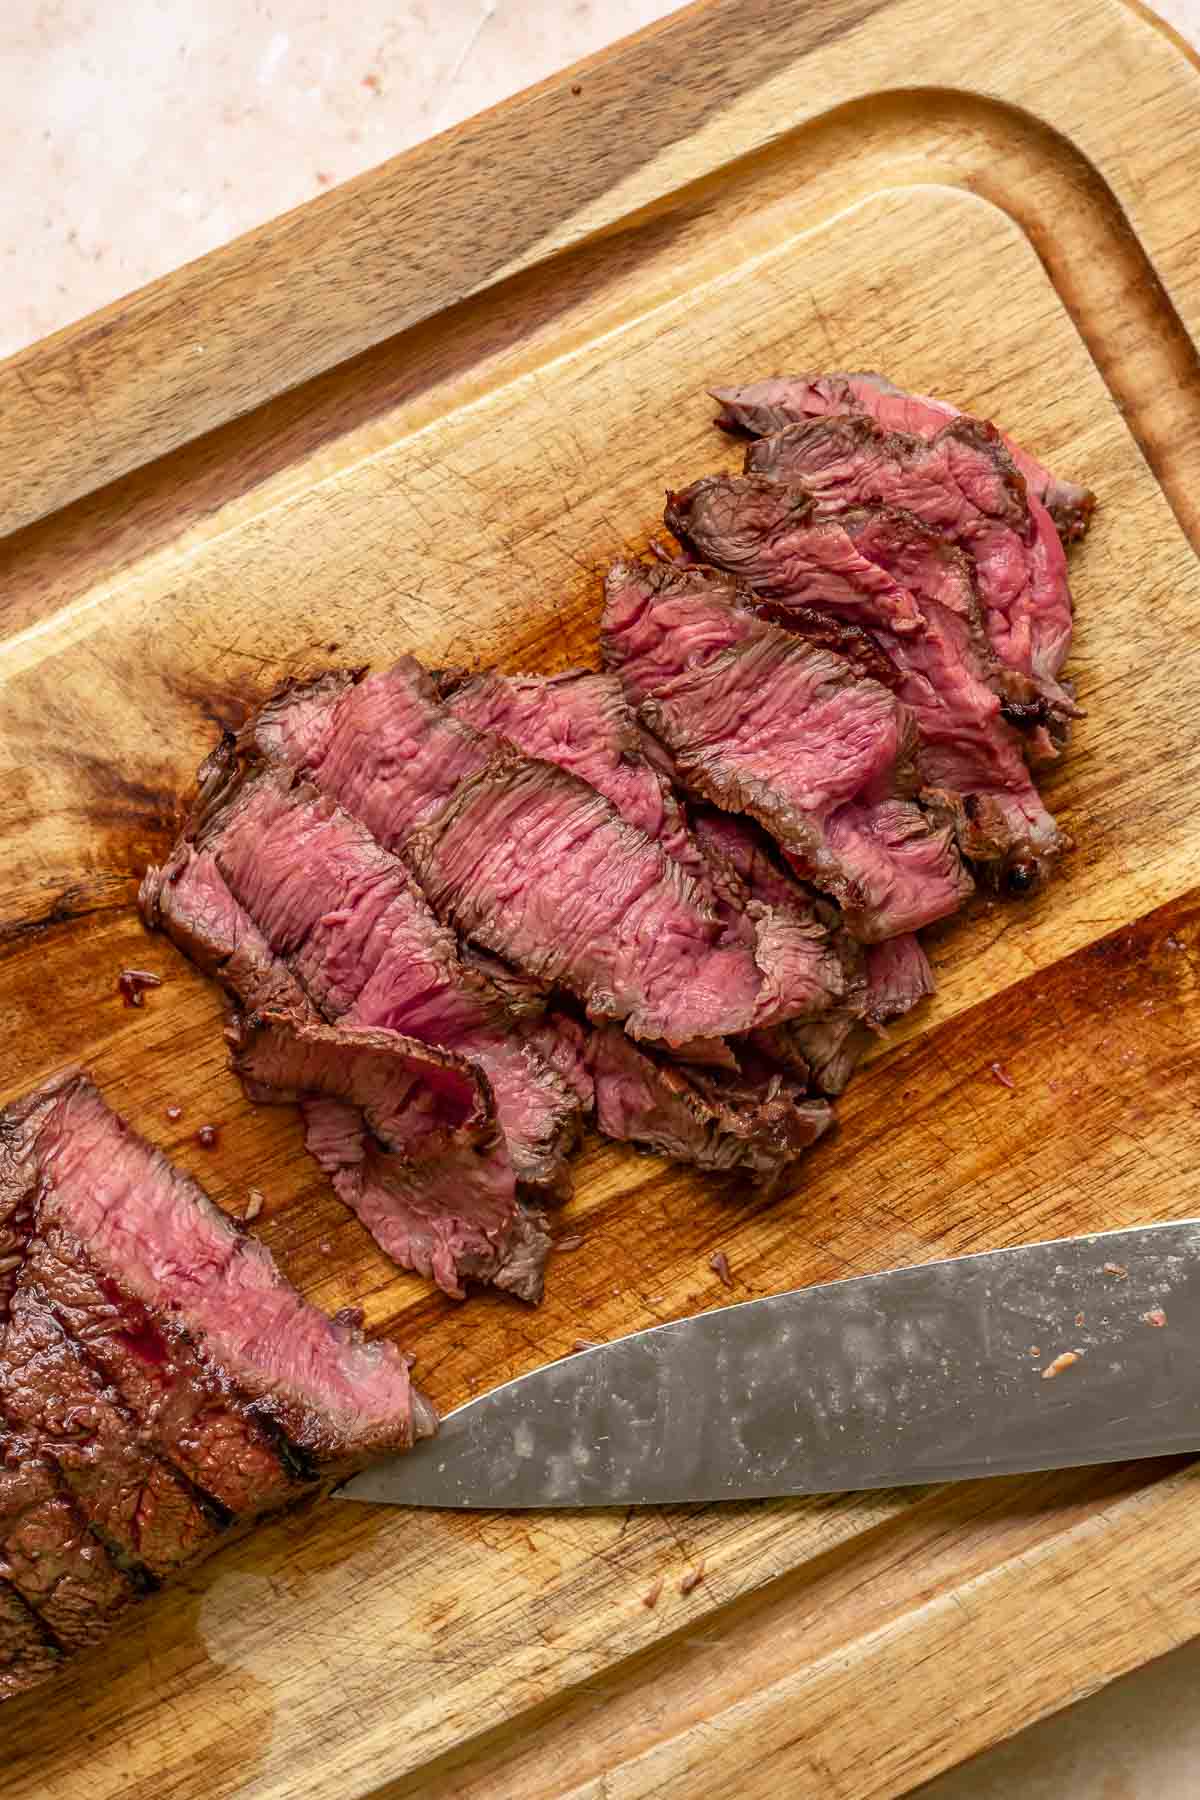 Sliced rare steak on a cutting board.